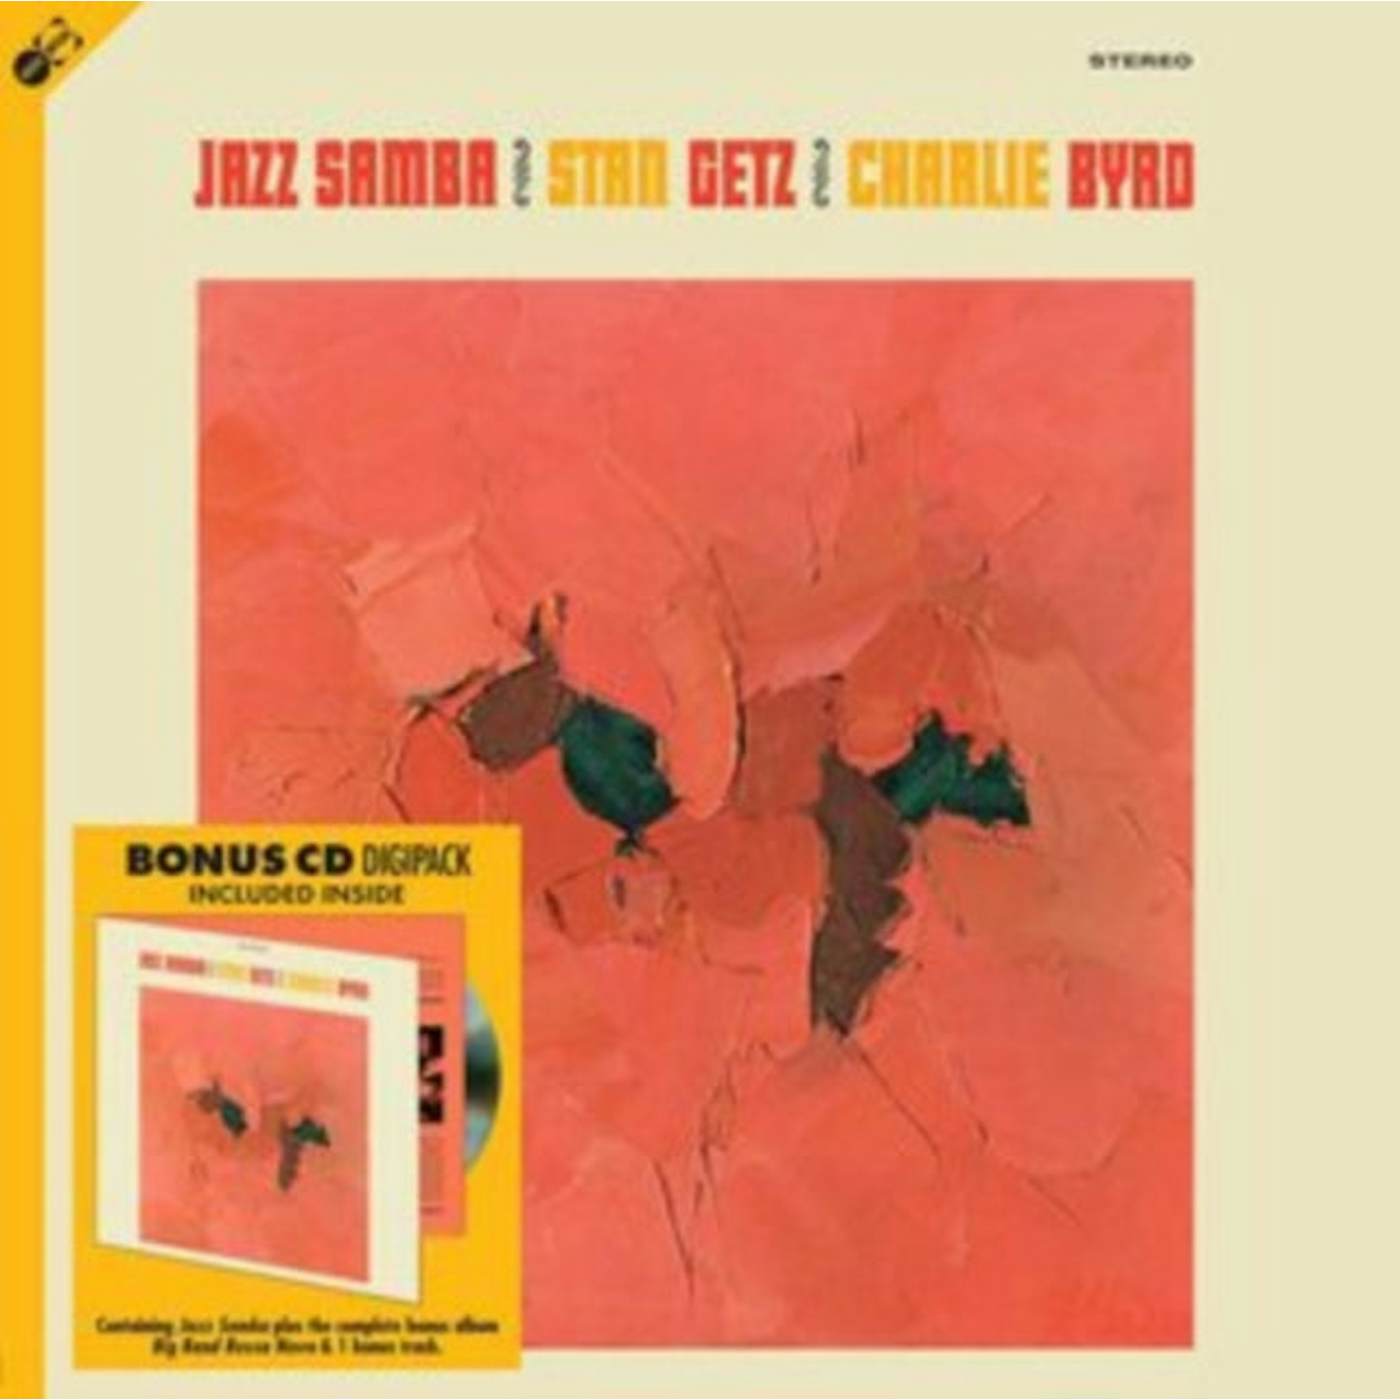 Stan Getz & Charlie Byrd LP Vinyl Record + CD - Jazz Samba